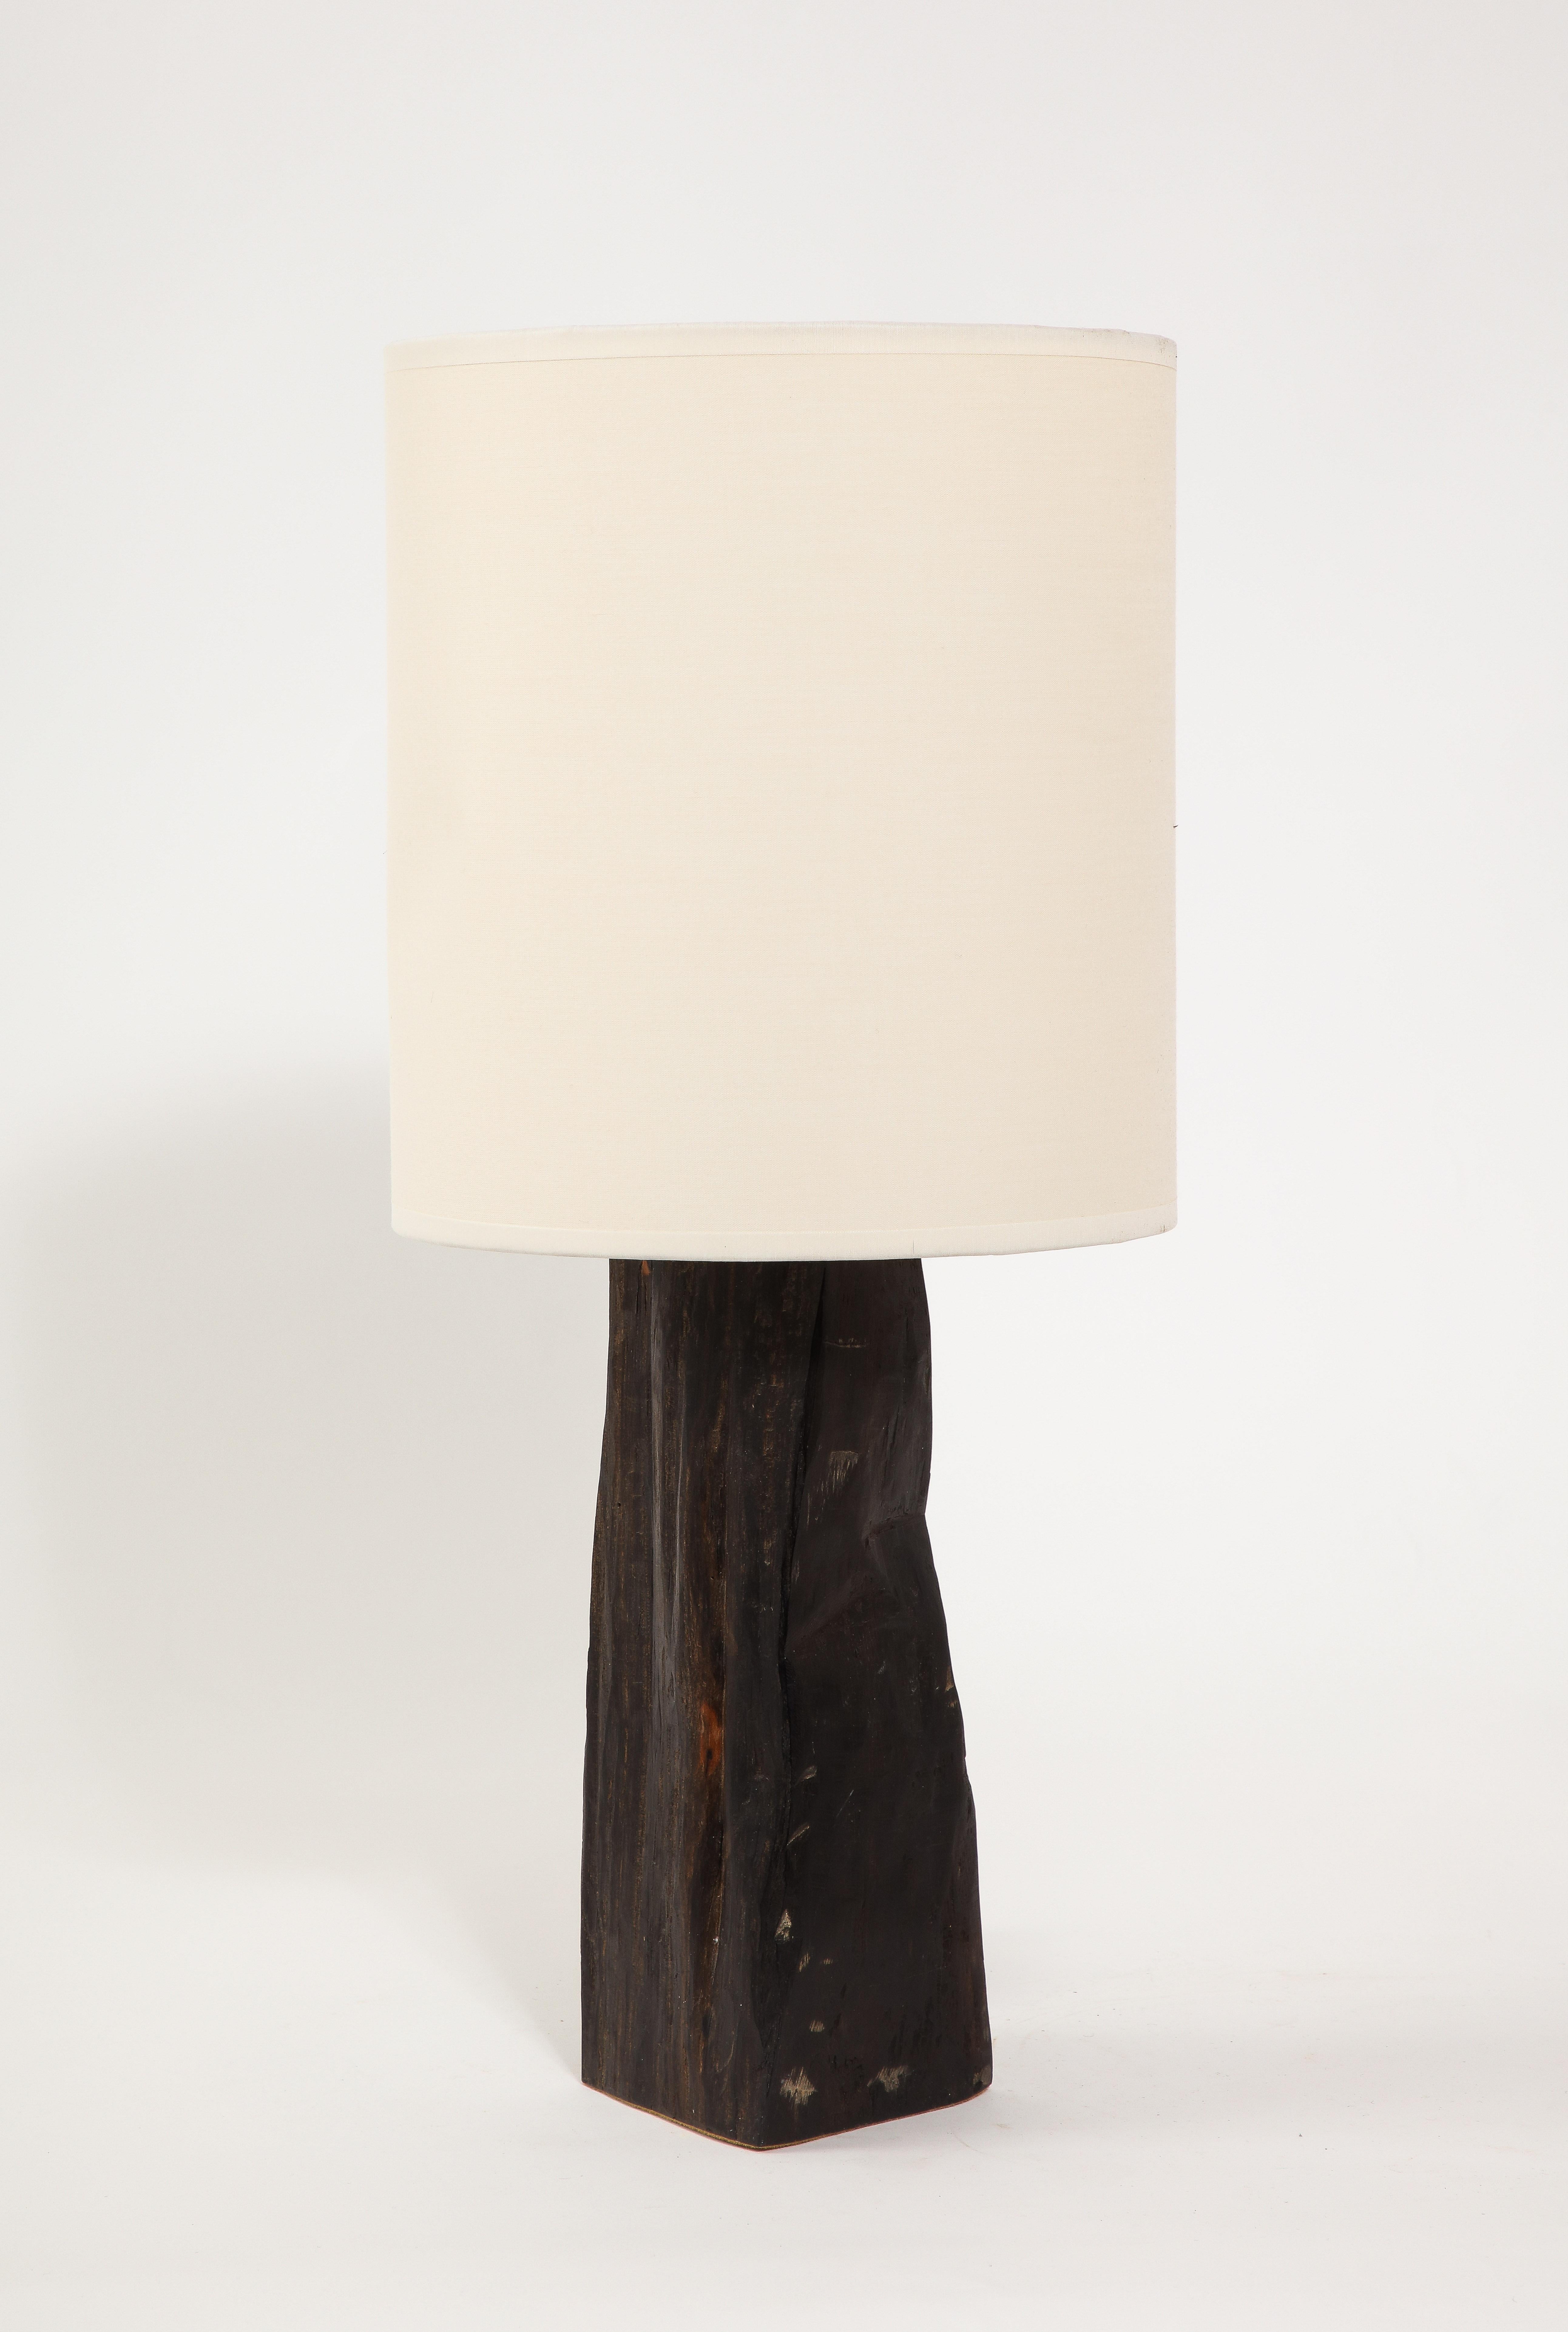 Carved Black Ebony Table Lamp, France 1960's For Sale 1